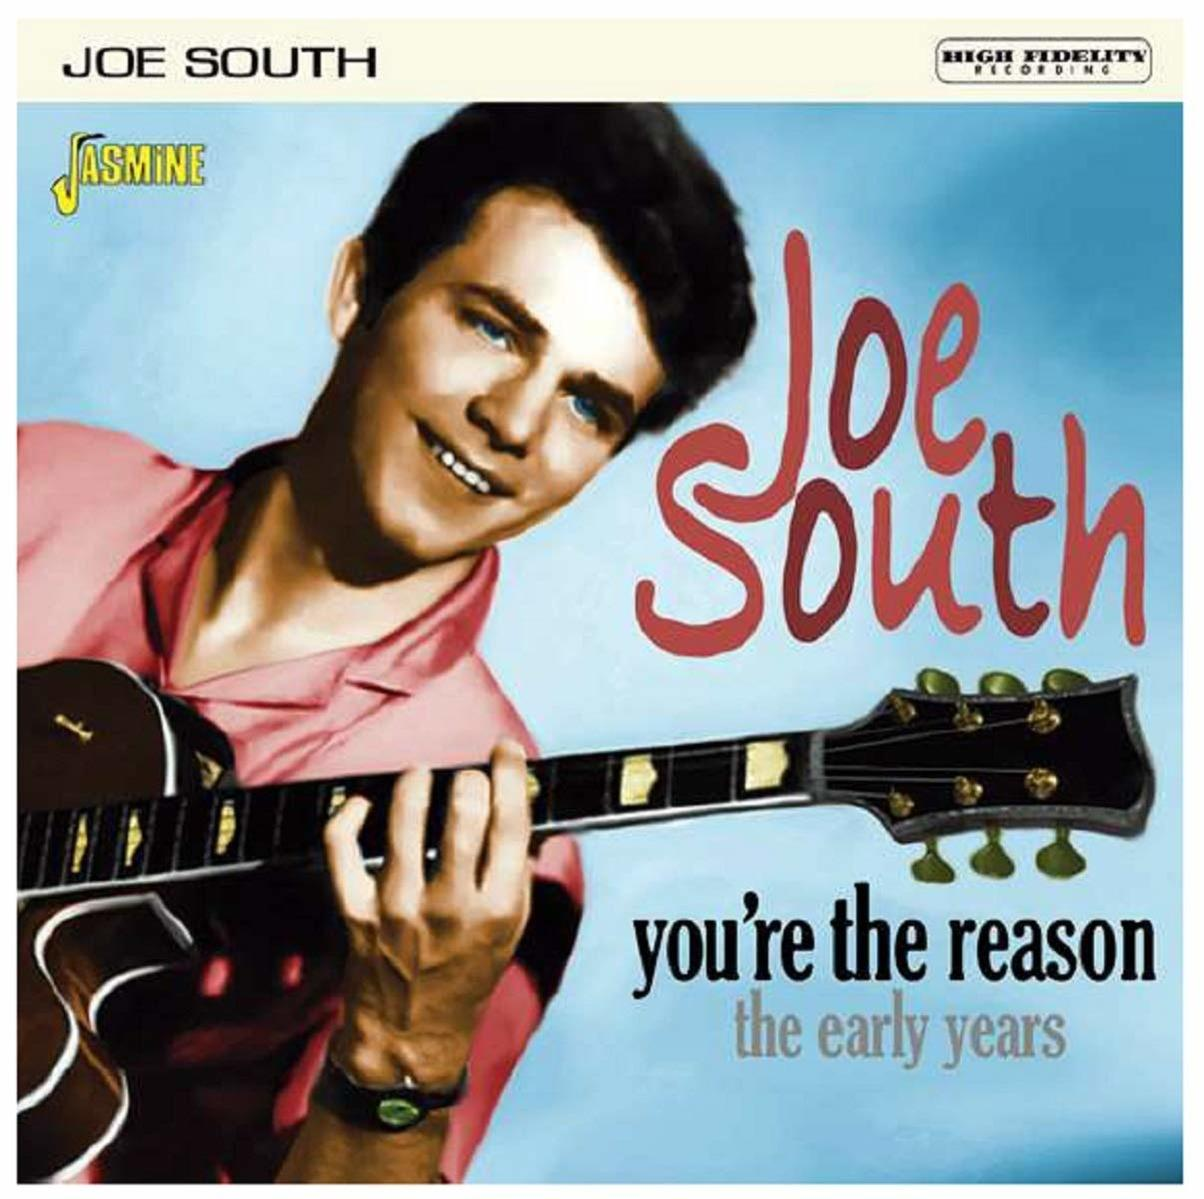 EARLY THE (CD) - THE YEARS Joe REASON. YOU\'E South -